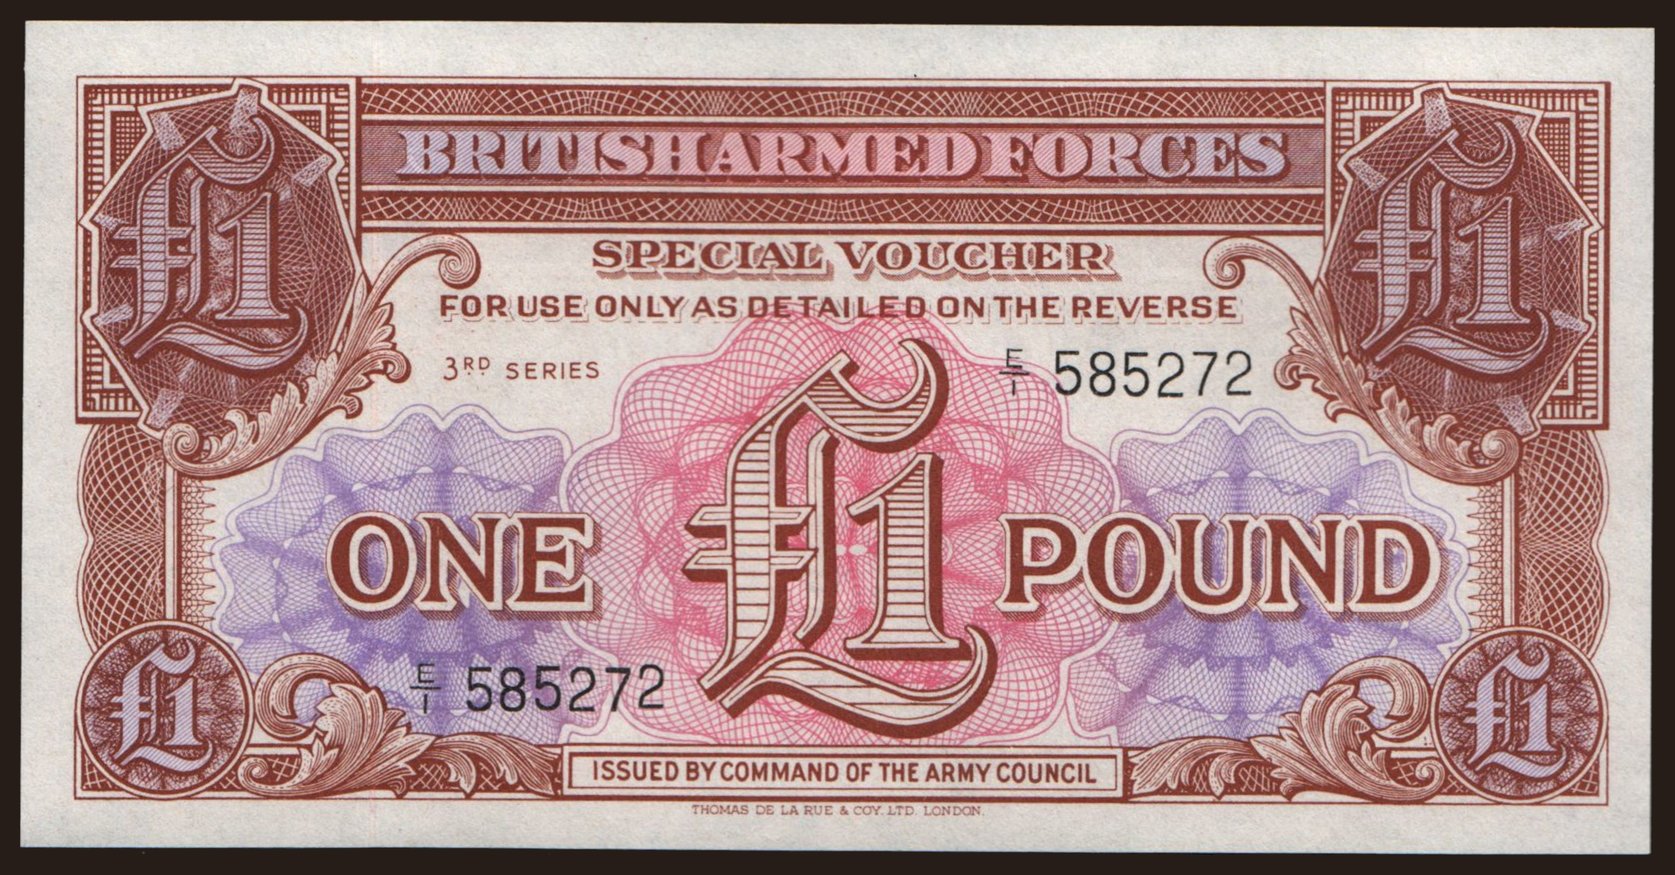 BAF, 1 pound, 1956